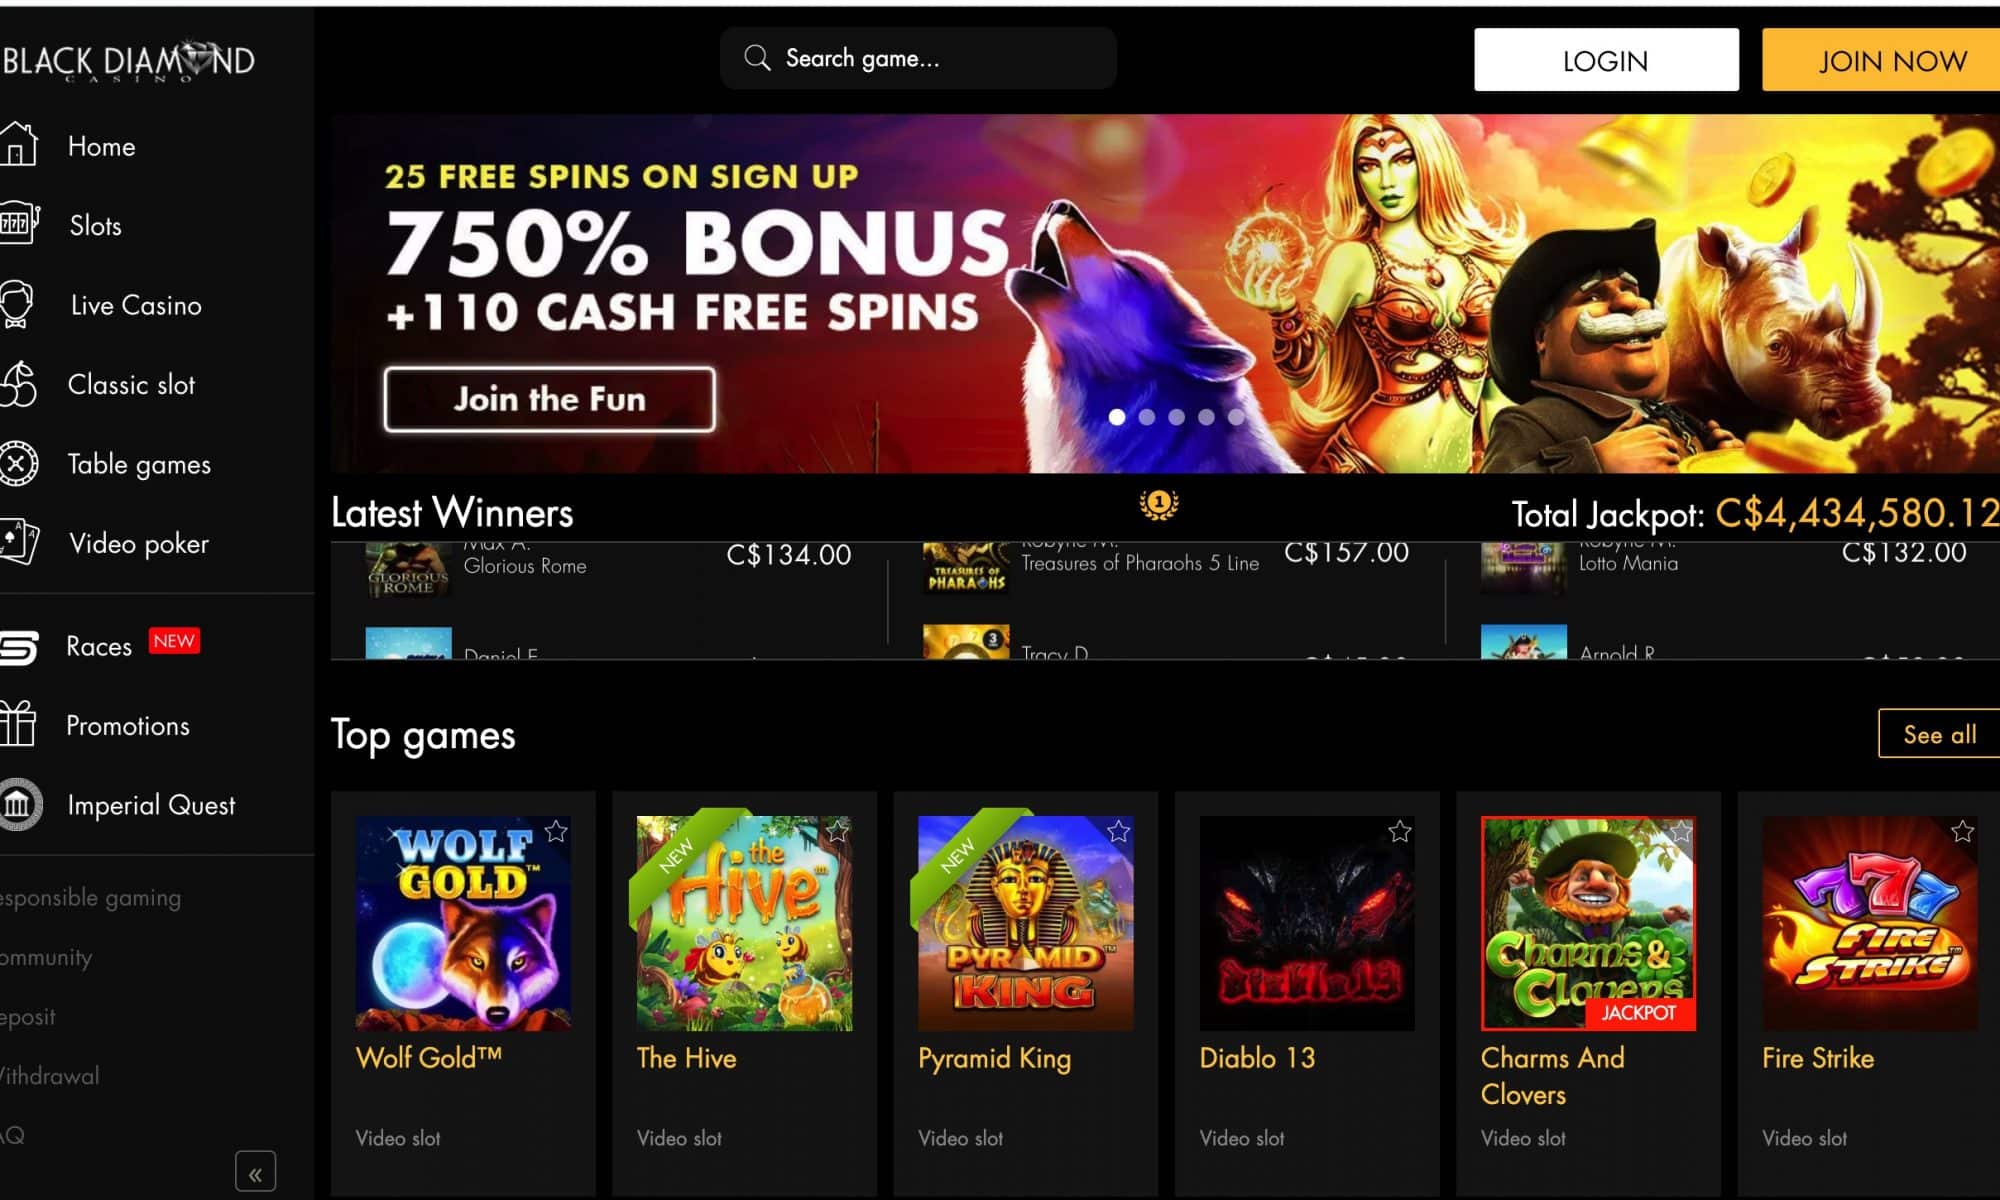 Black Diamond Casino - get 675% deposit bonus + 25 free spins